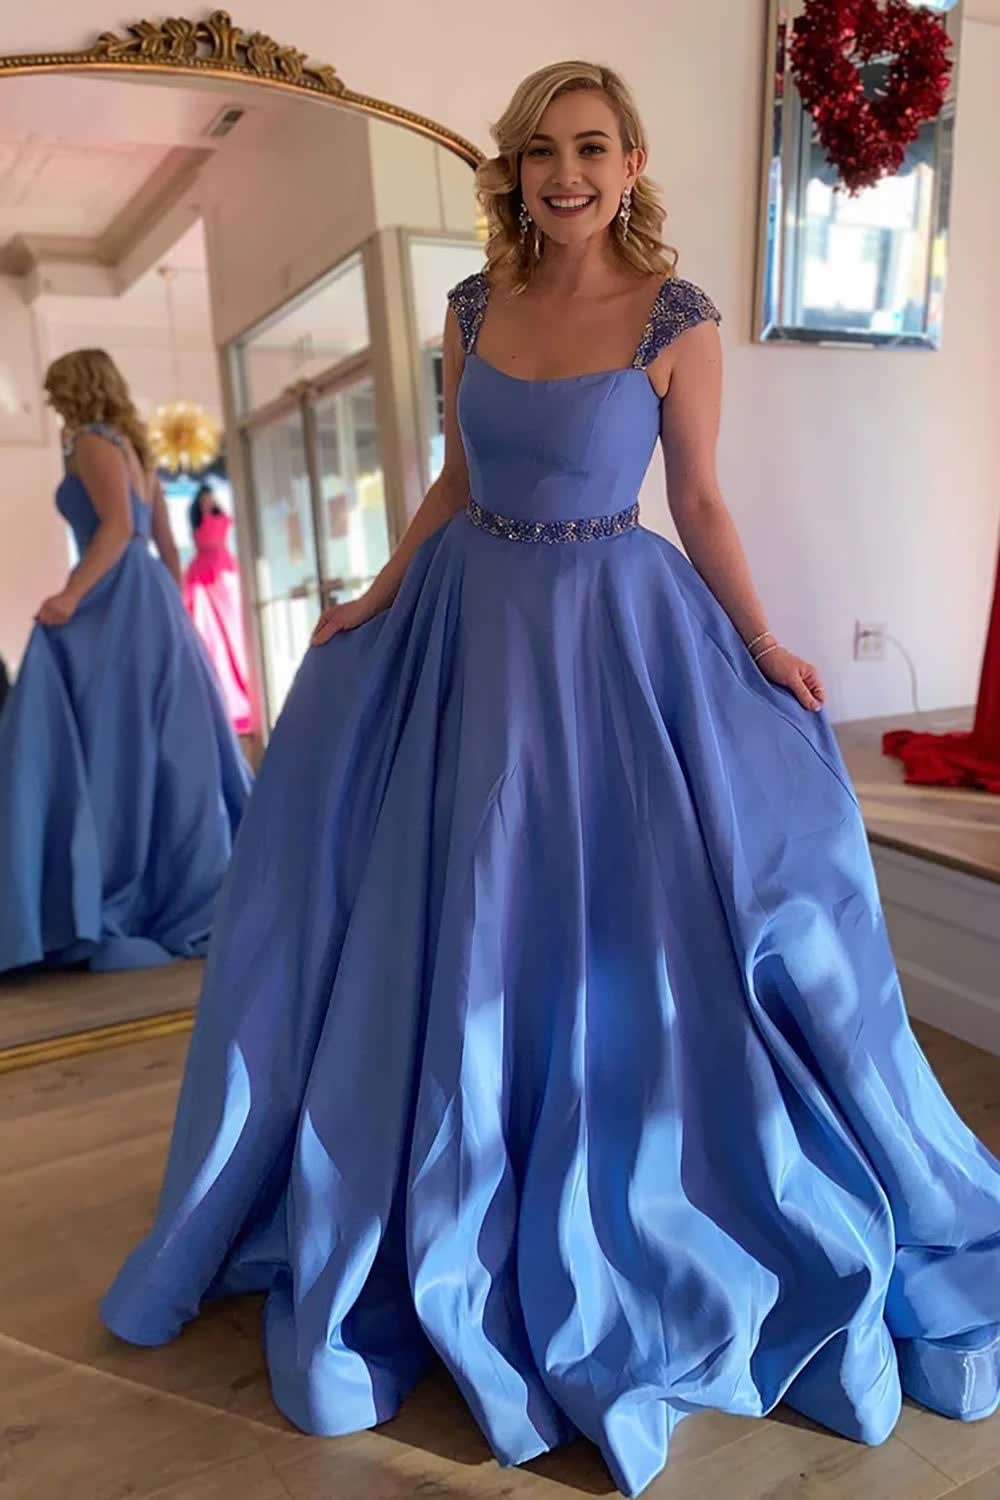 Blue A-Line Cap Sleeves Long Corset Prom Dress with Beading outfit, Blue A-Line Cap Sleeves Long Prom Dress with Beading